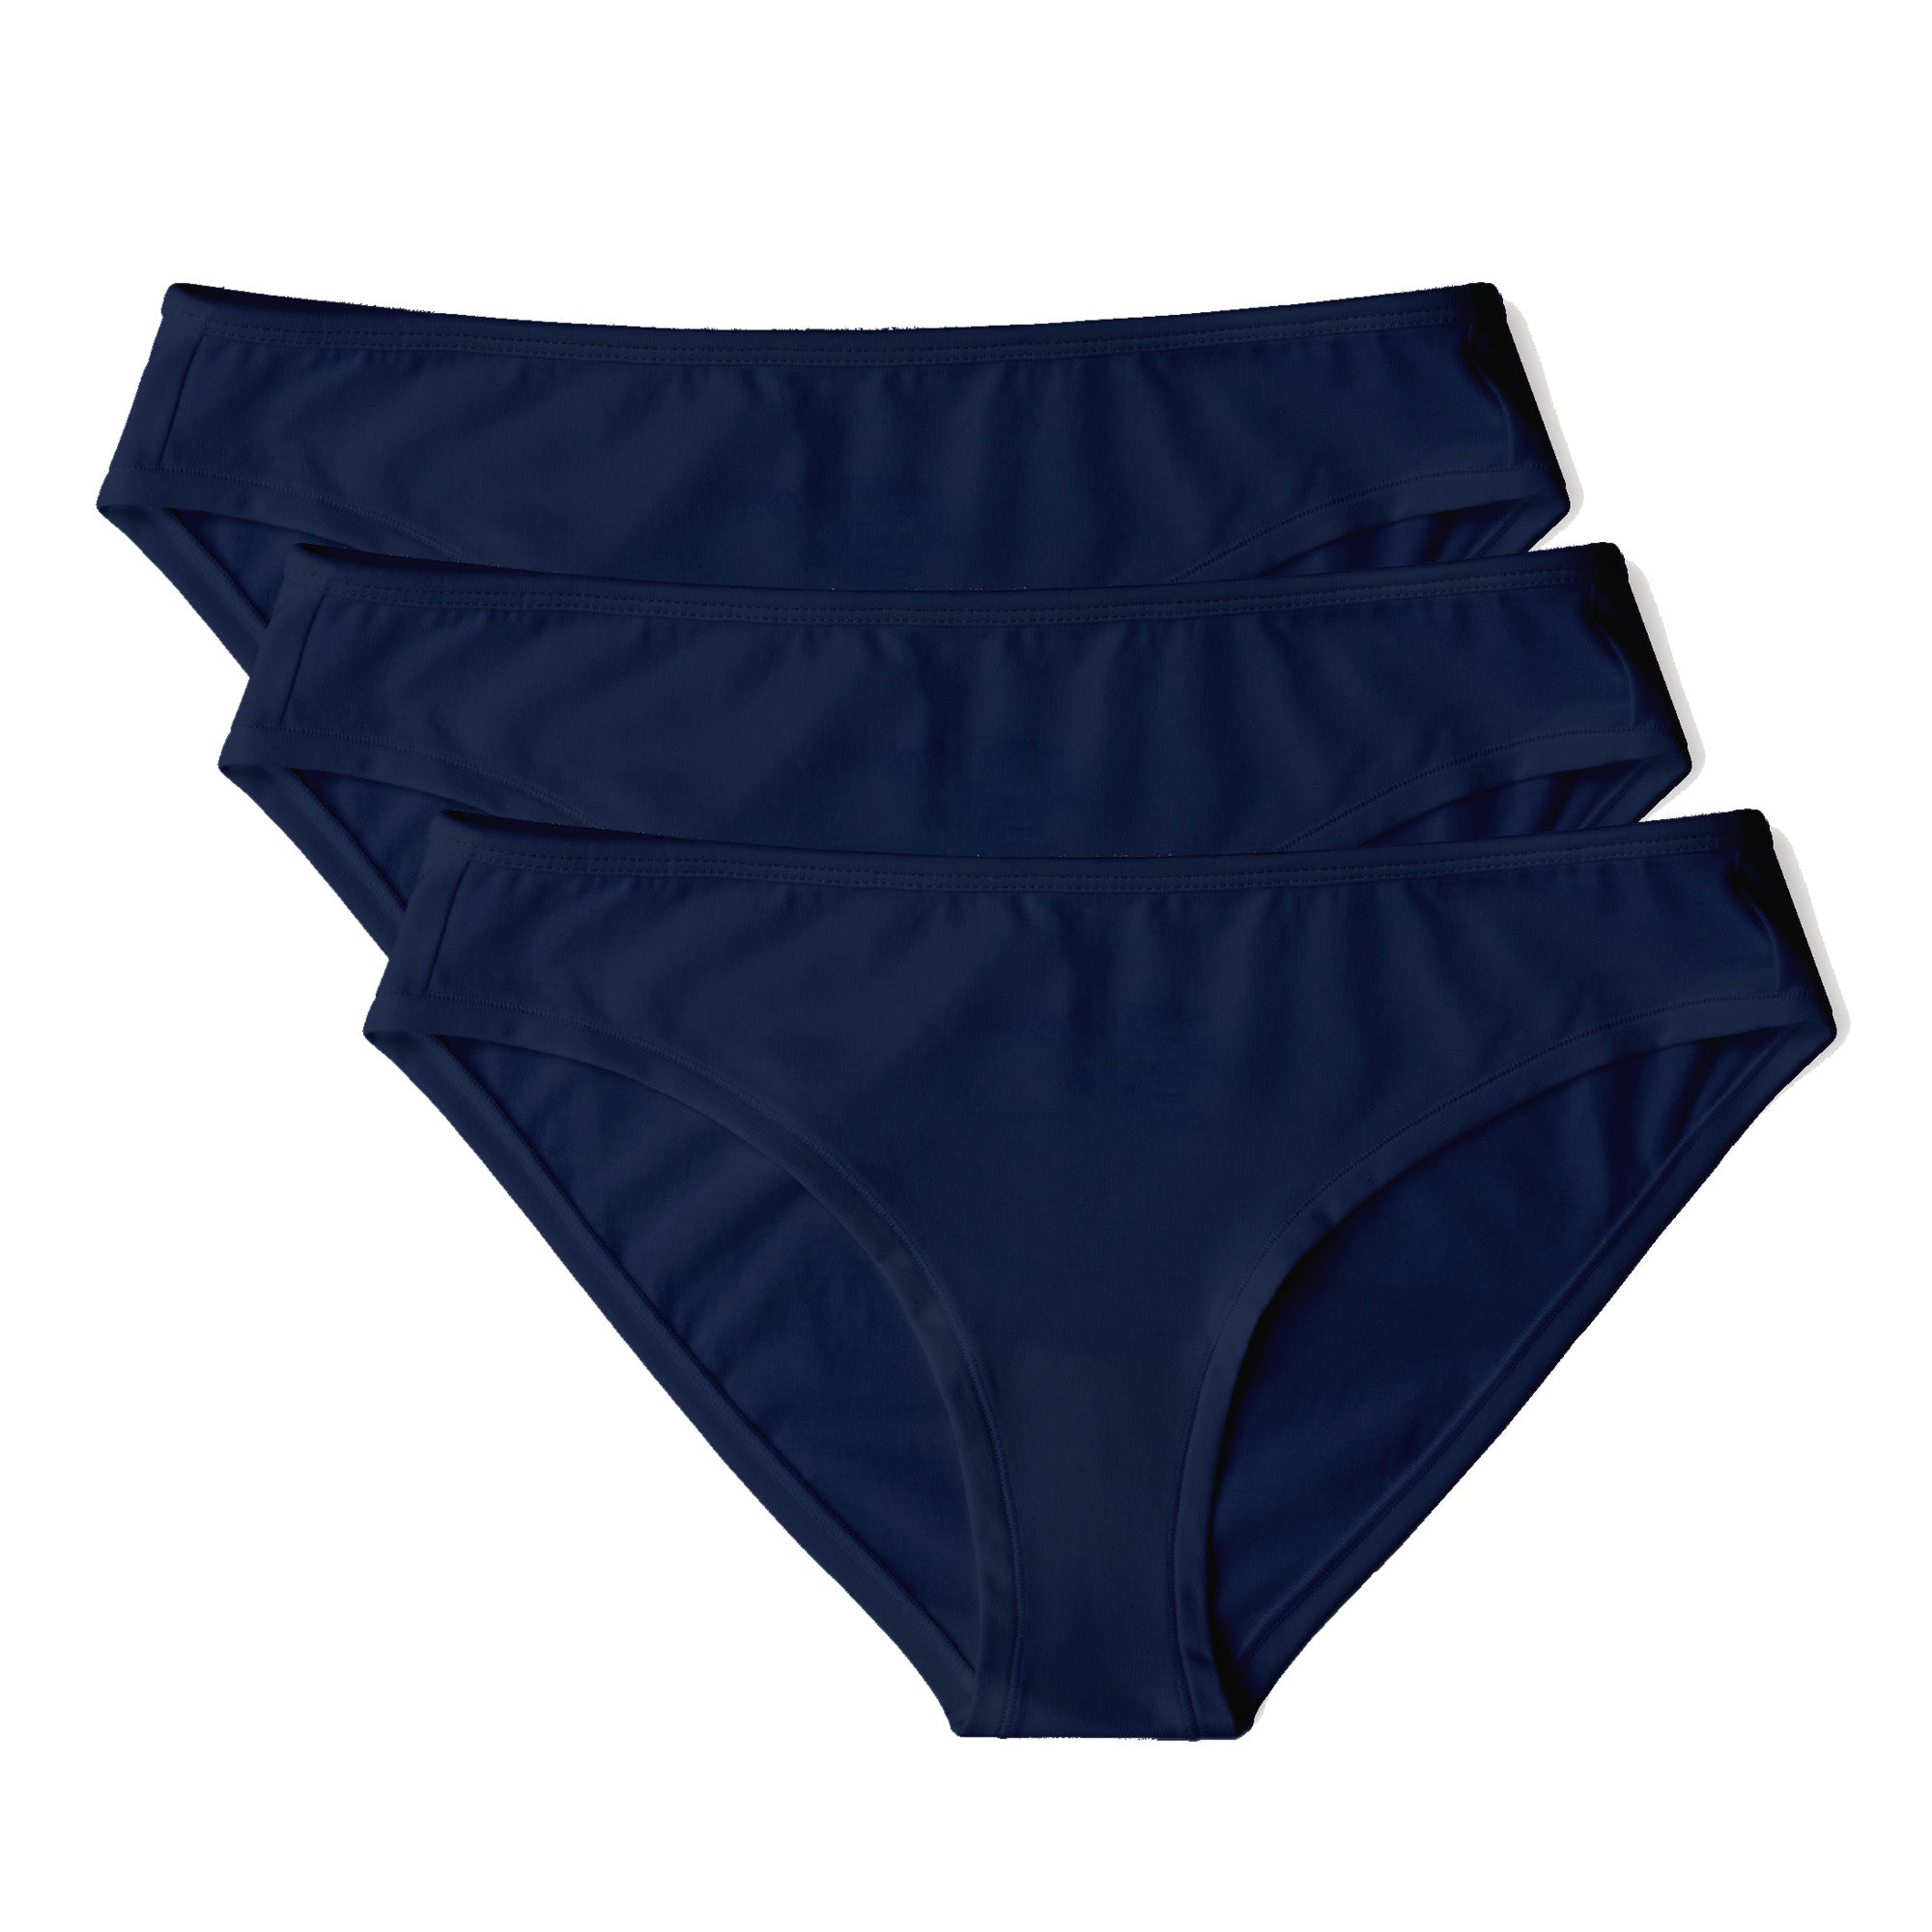 YWDJ High Waisted Underwear for Women Women Satin Panties Mid Waist Wavy  Cotton Briefs Blue M